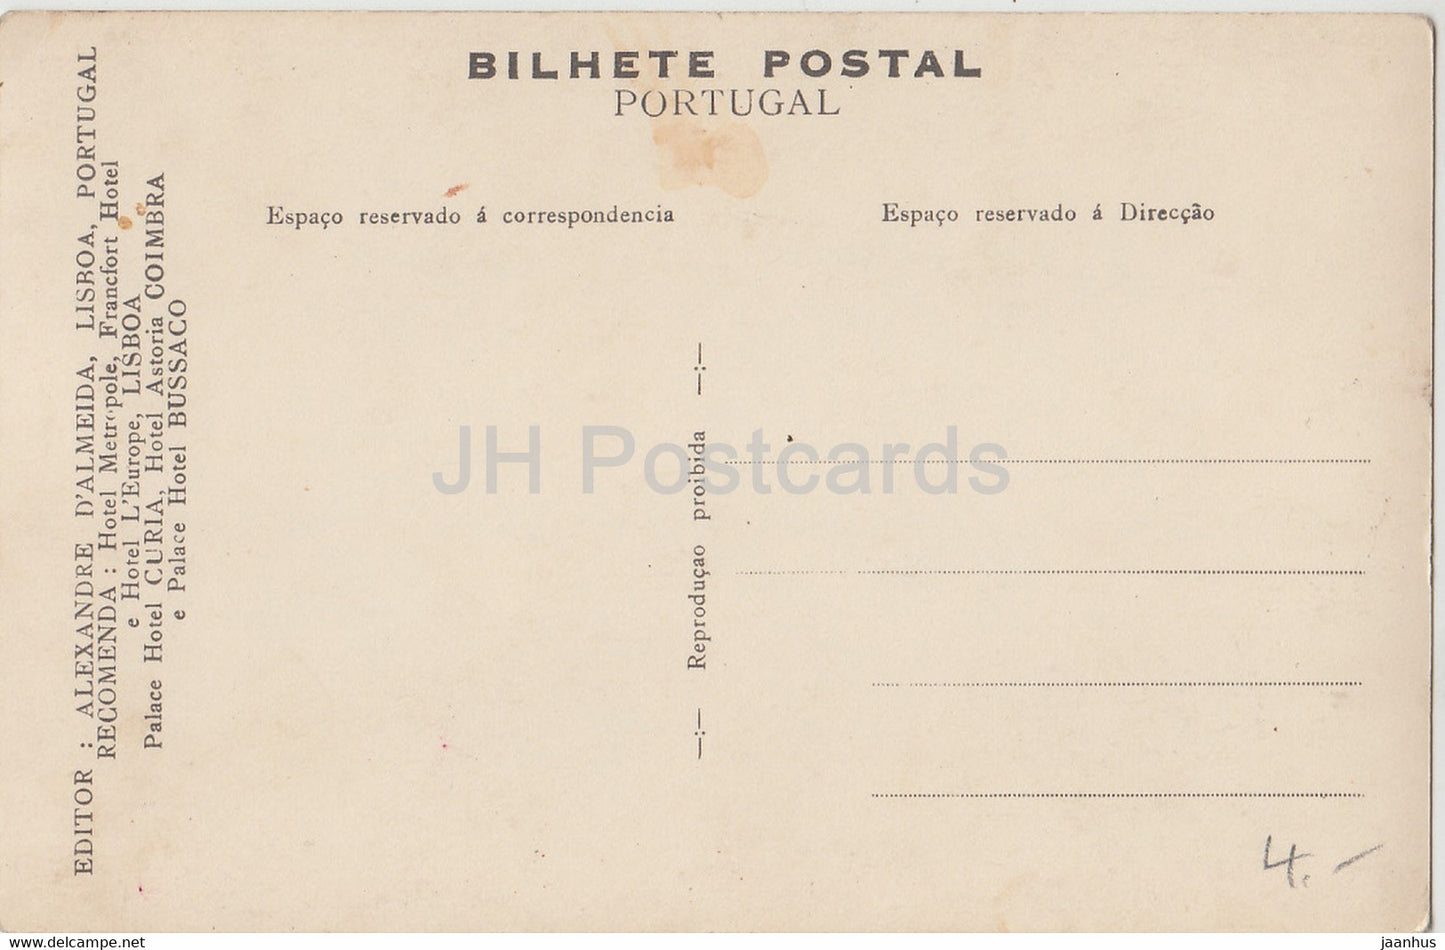 Bussaco - Floresta e Palace Hotel - 47 - old postcard - Portugal - unused